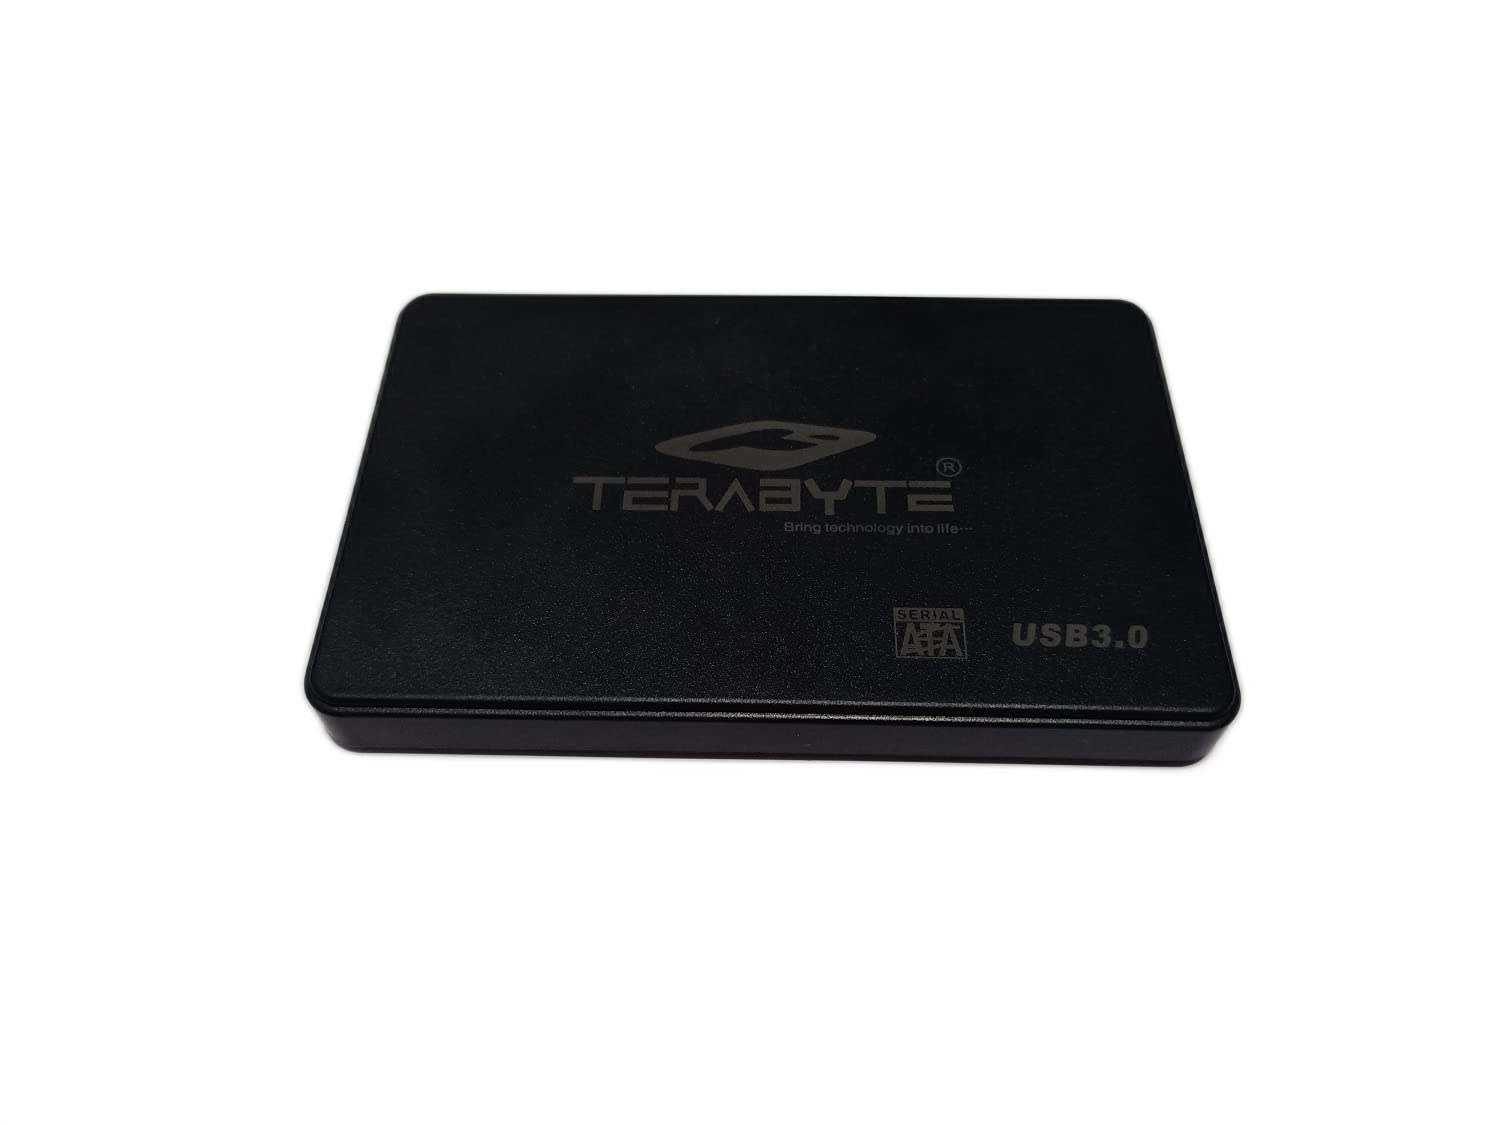 Terabyte Screwless Laptop Casing 2.5